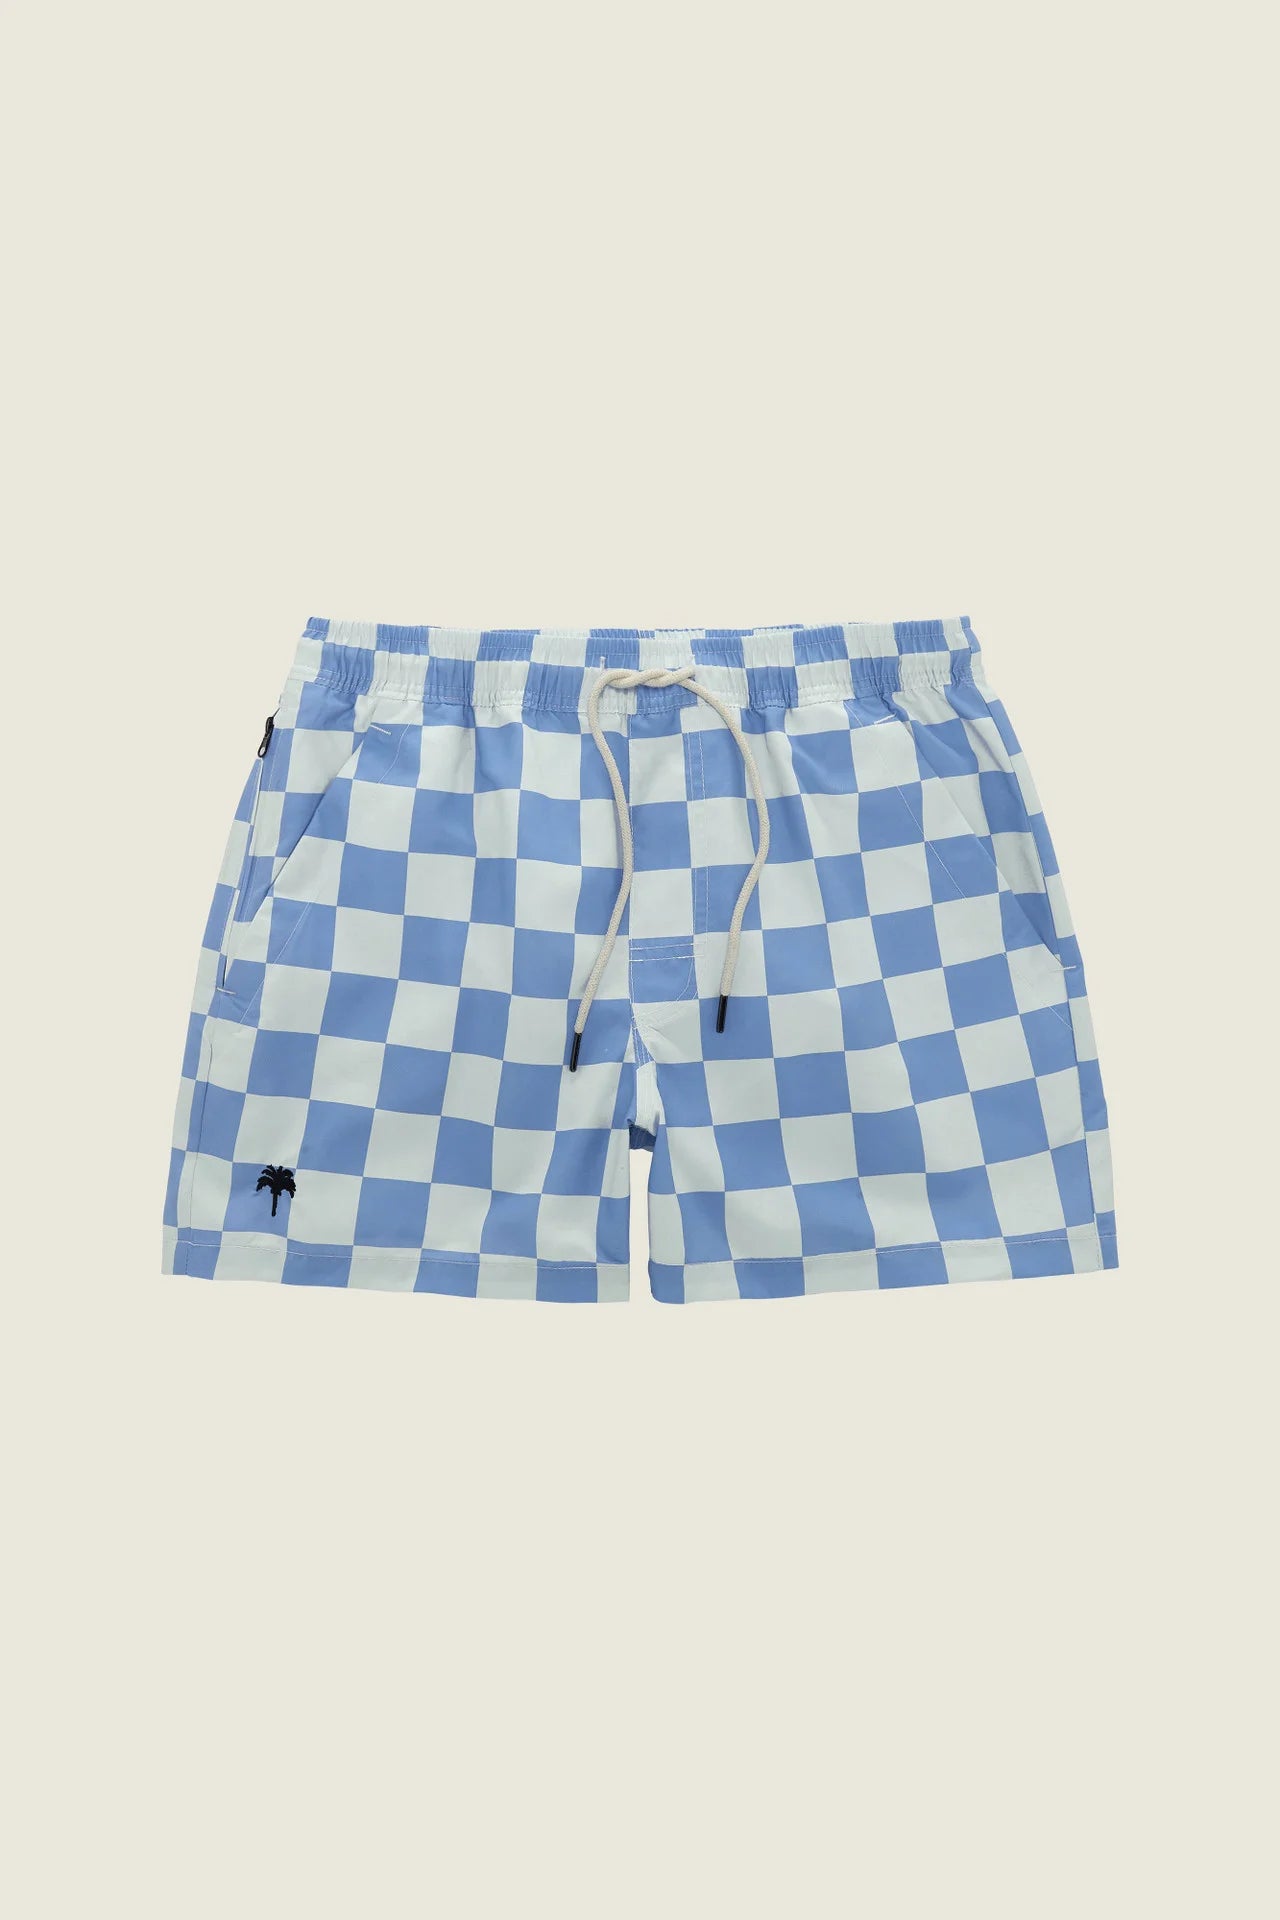 OAS Swim Shorts | Blue Chess